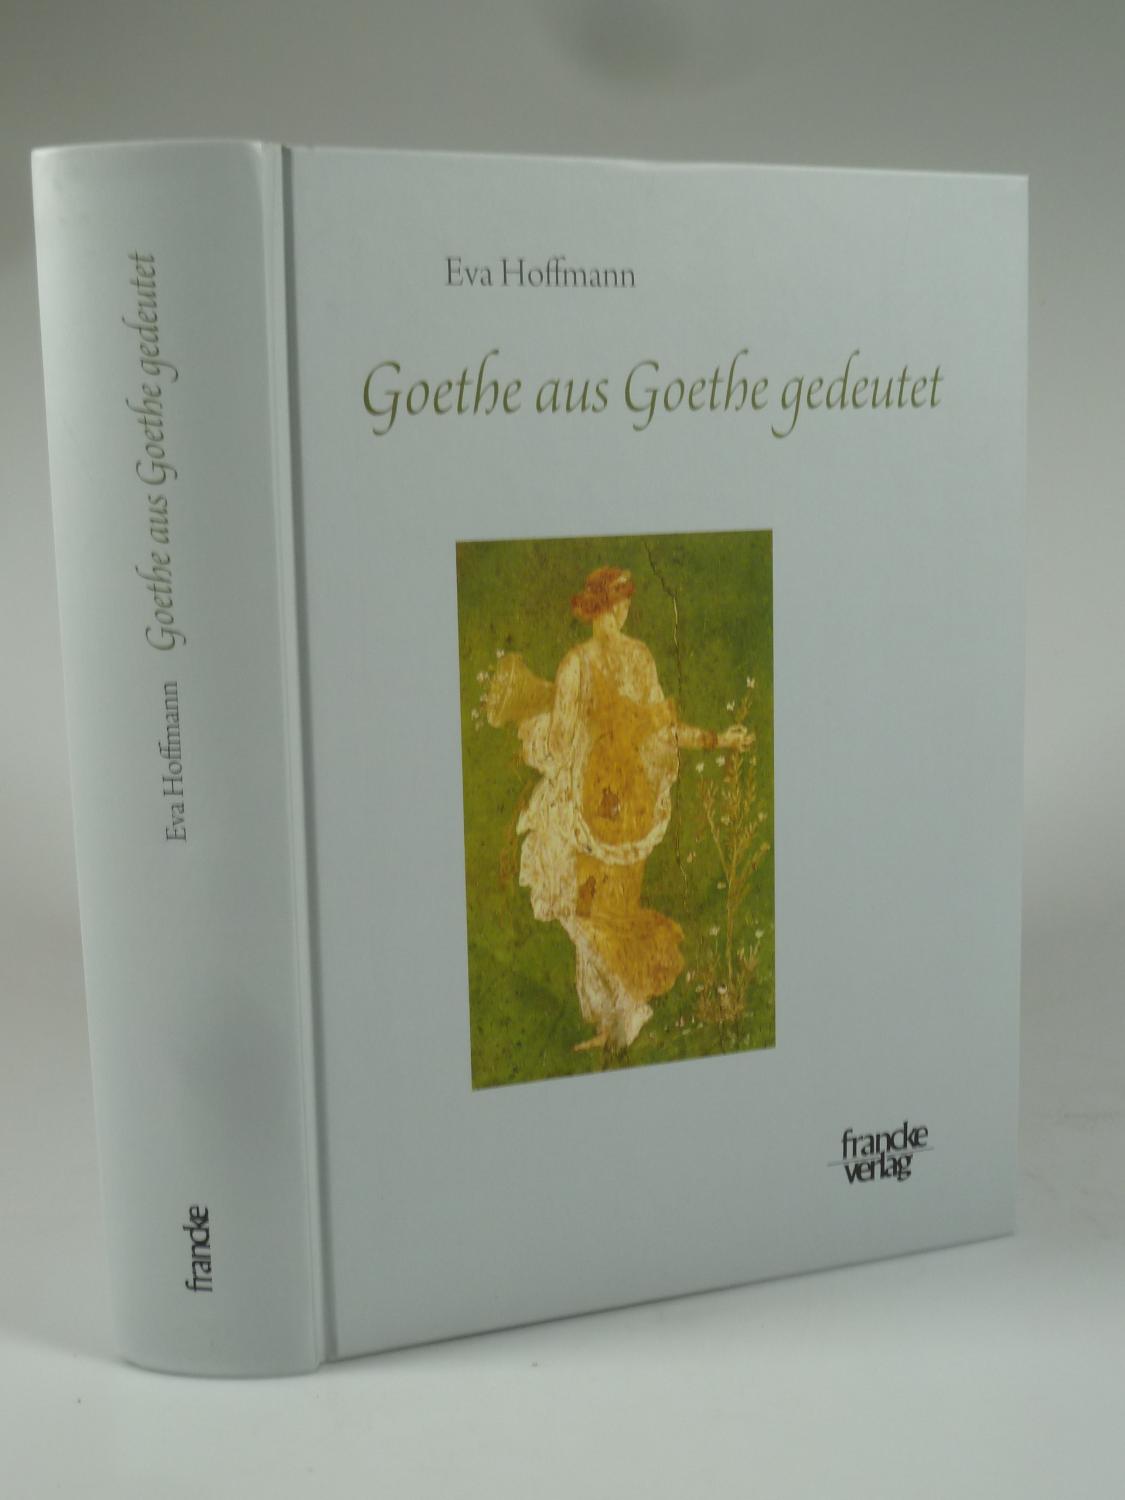 Goethe aus Goethe gedeutet. - HOFFMANN, Eva.